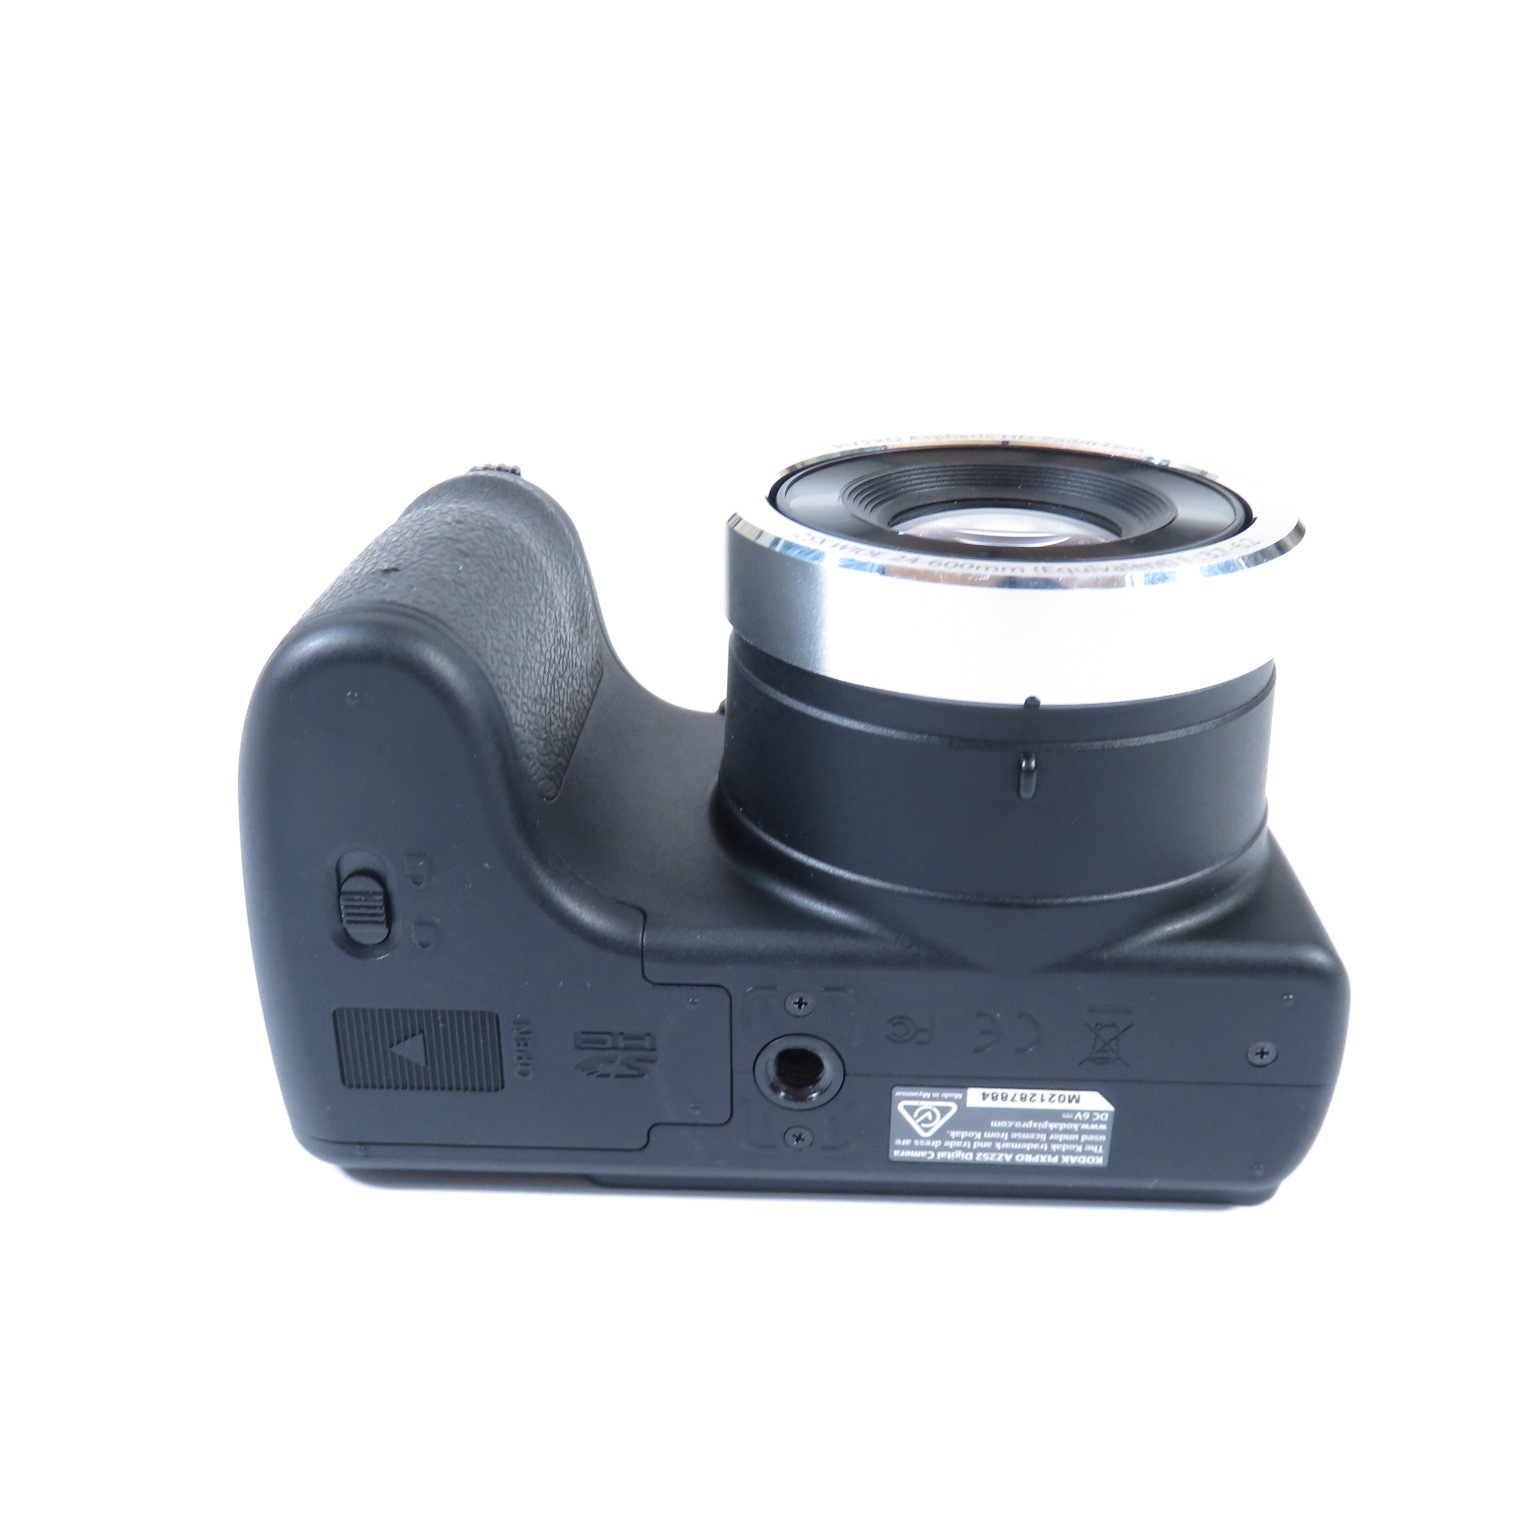 Kodak PIXPRO AZ252 Point & Shoot Digital Camera with 3” LCD, Black